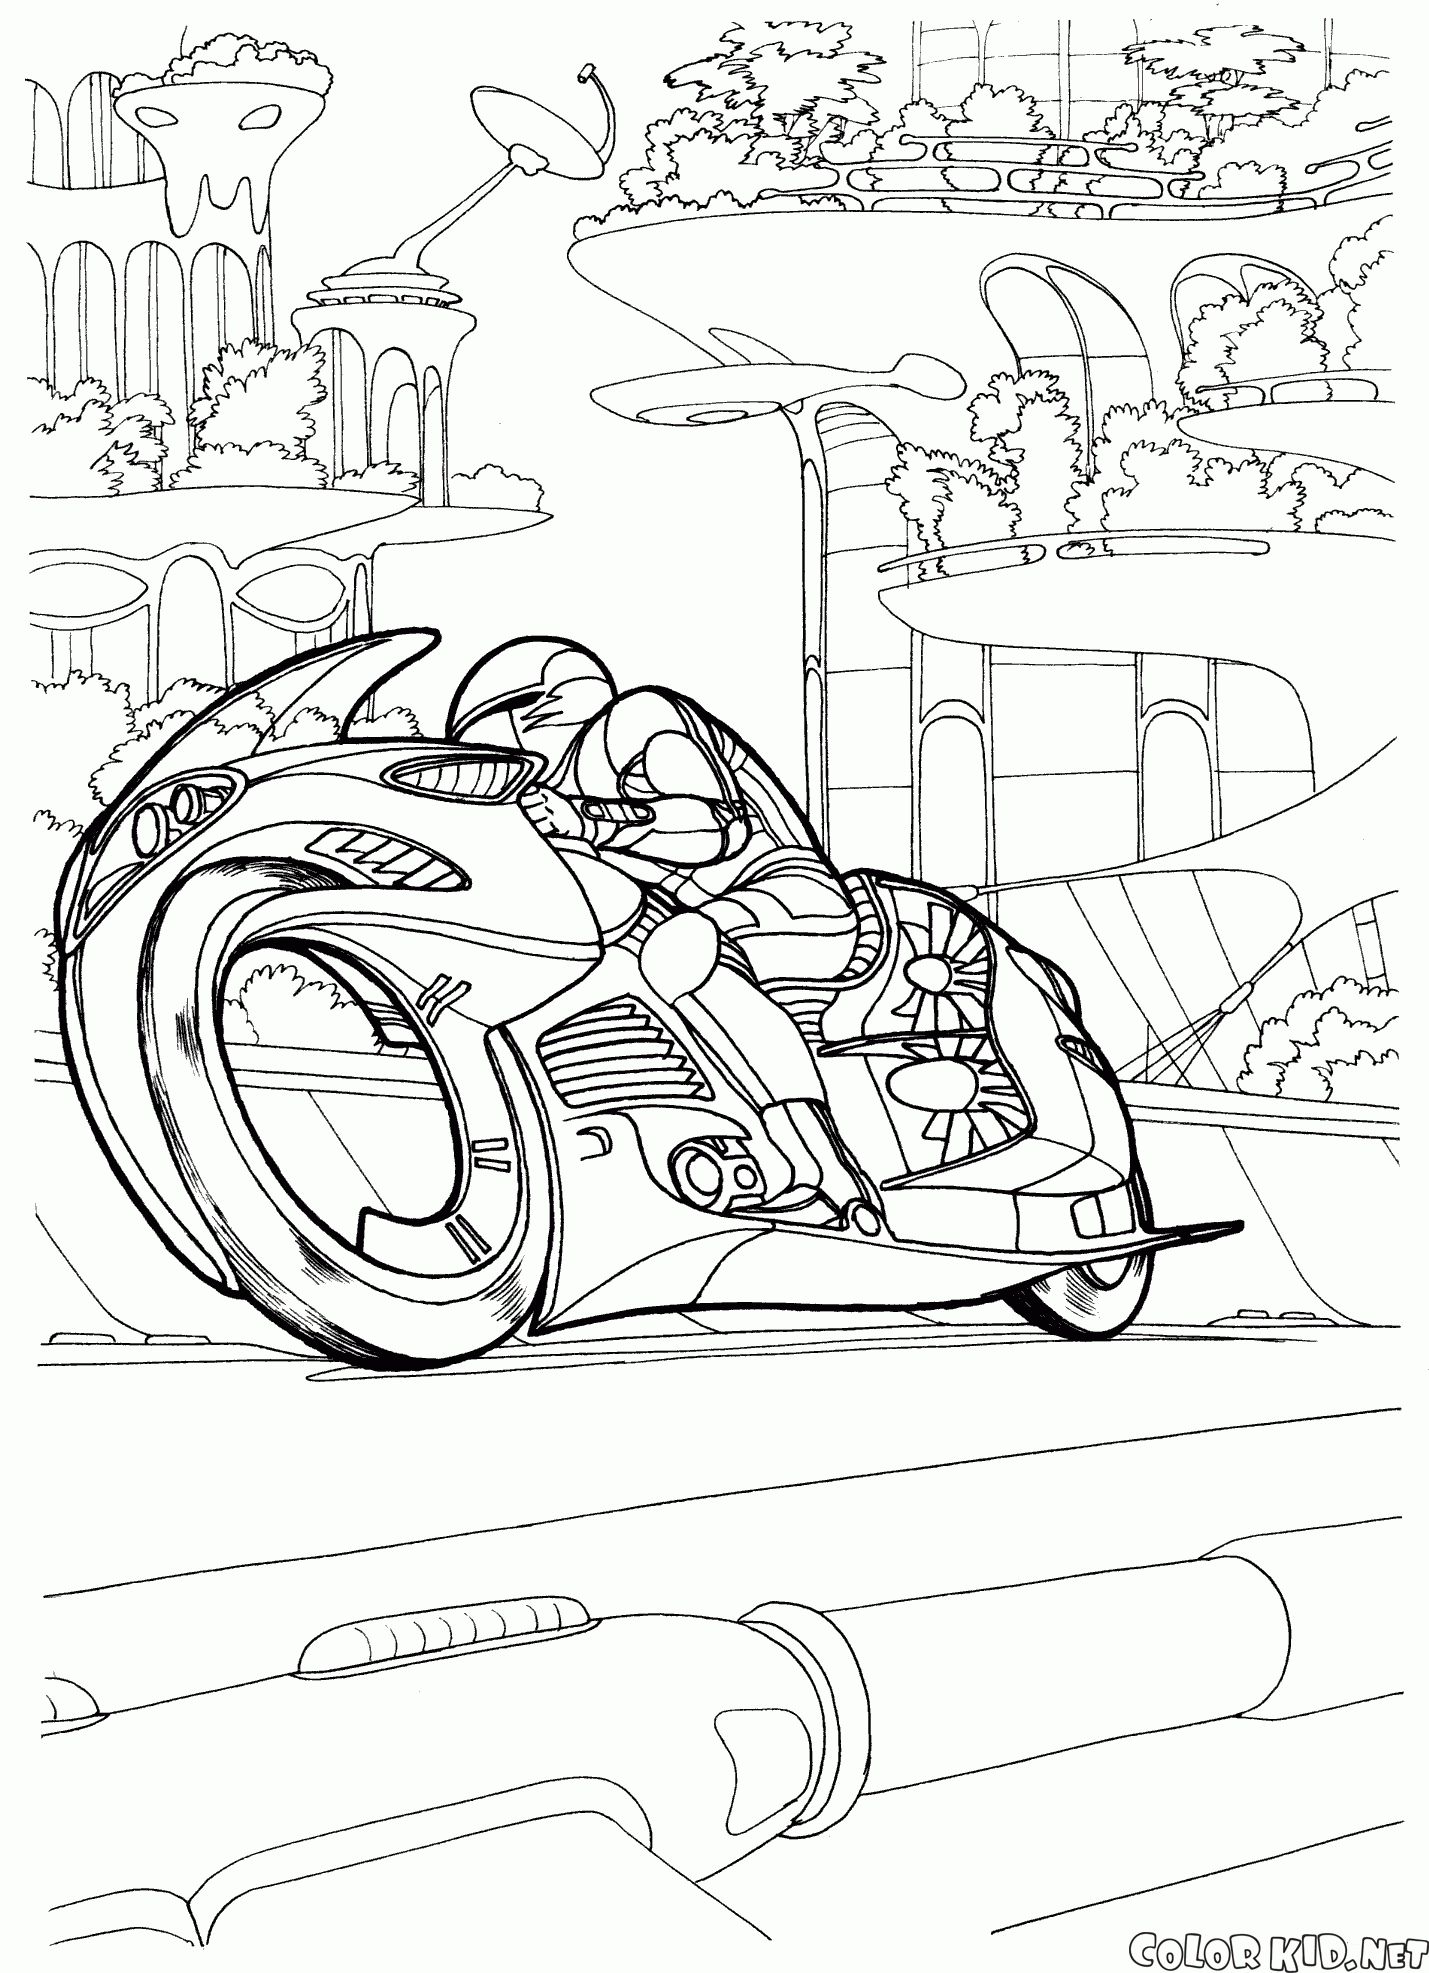 Una motocicleta prototipo